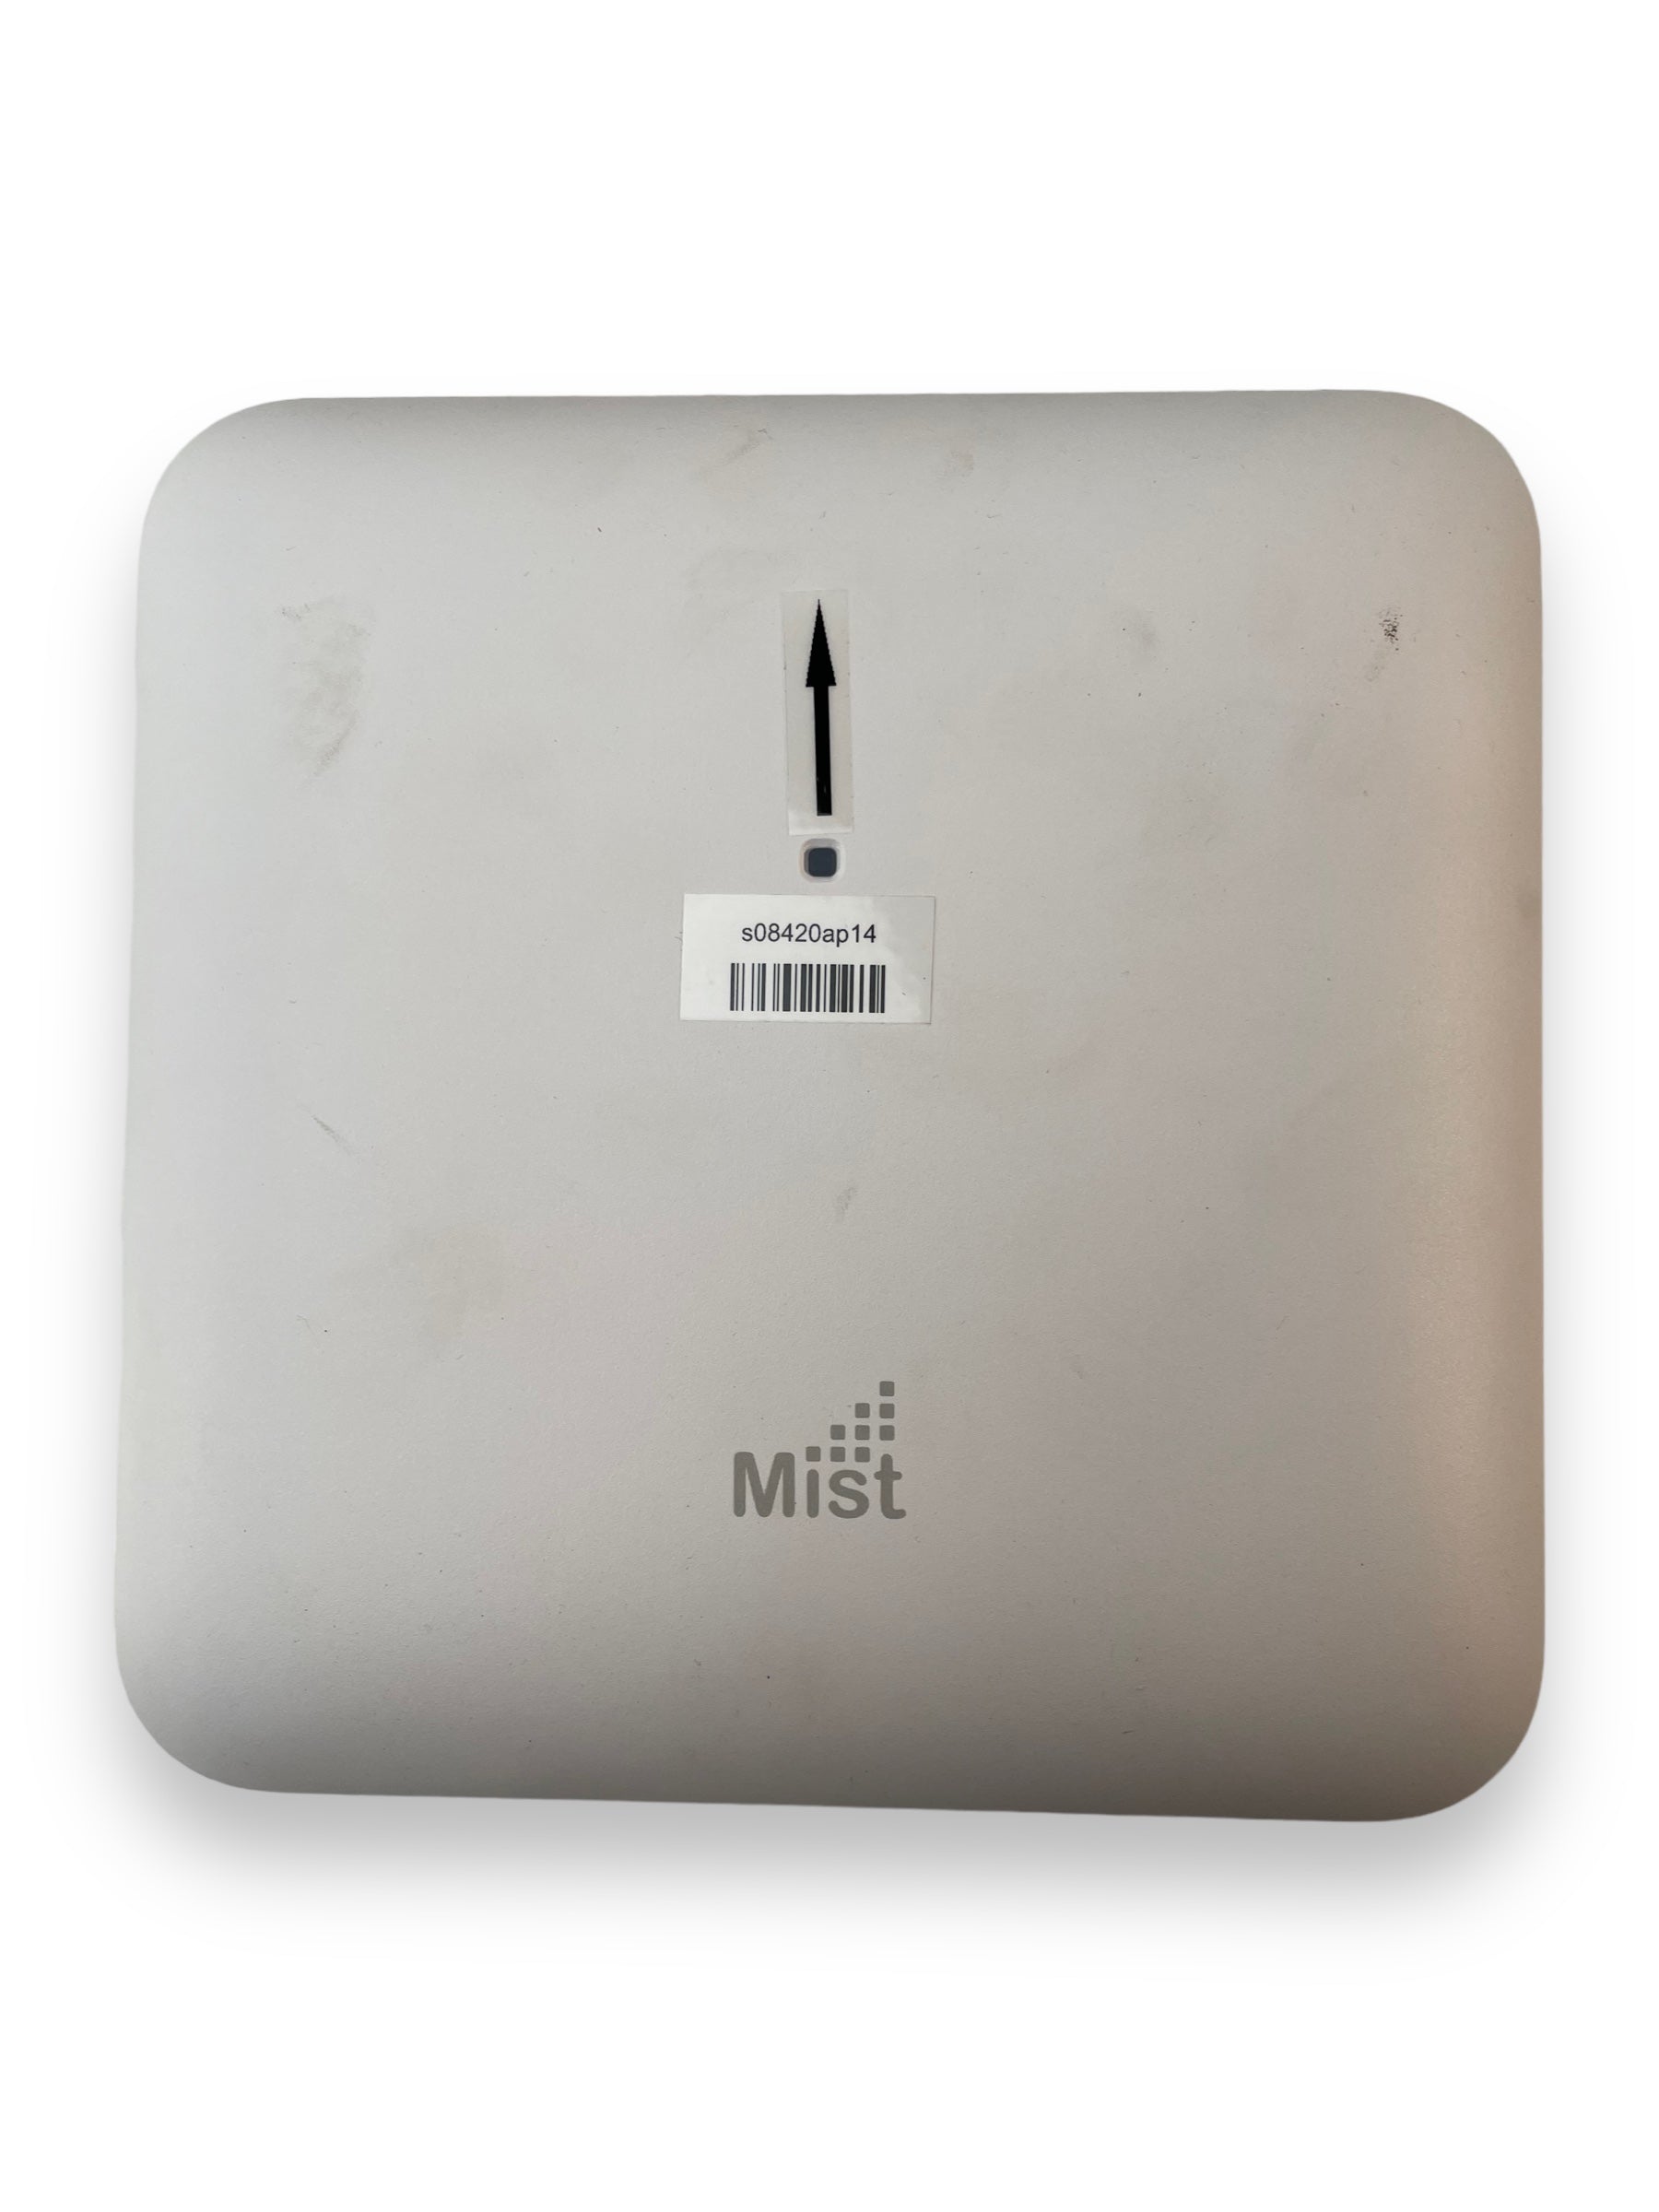 Mist AP41 Wi-Fi Access Point